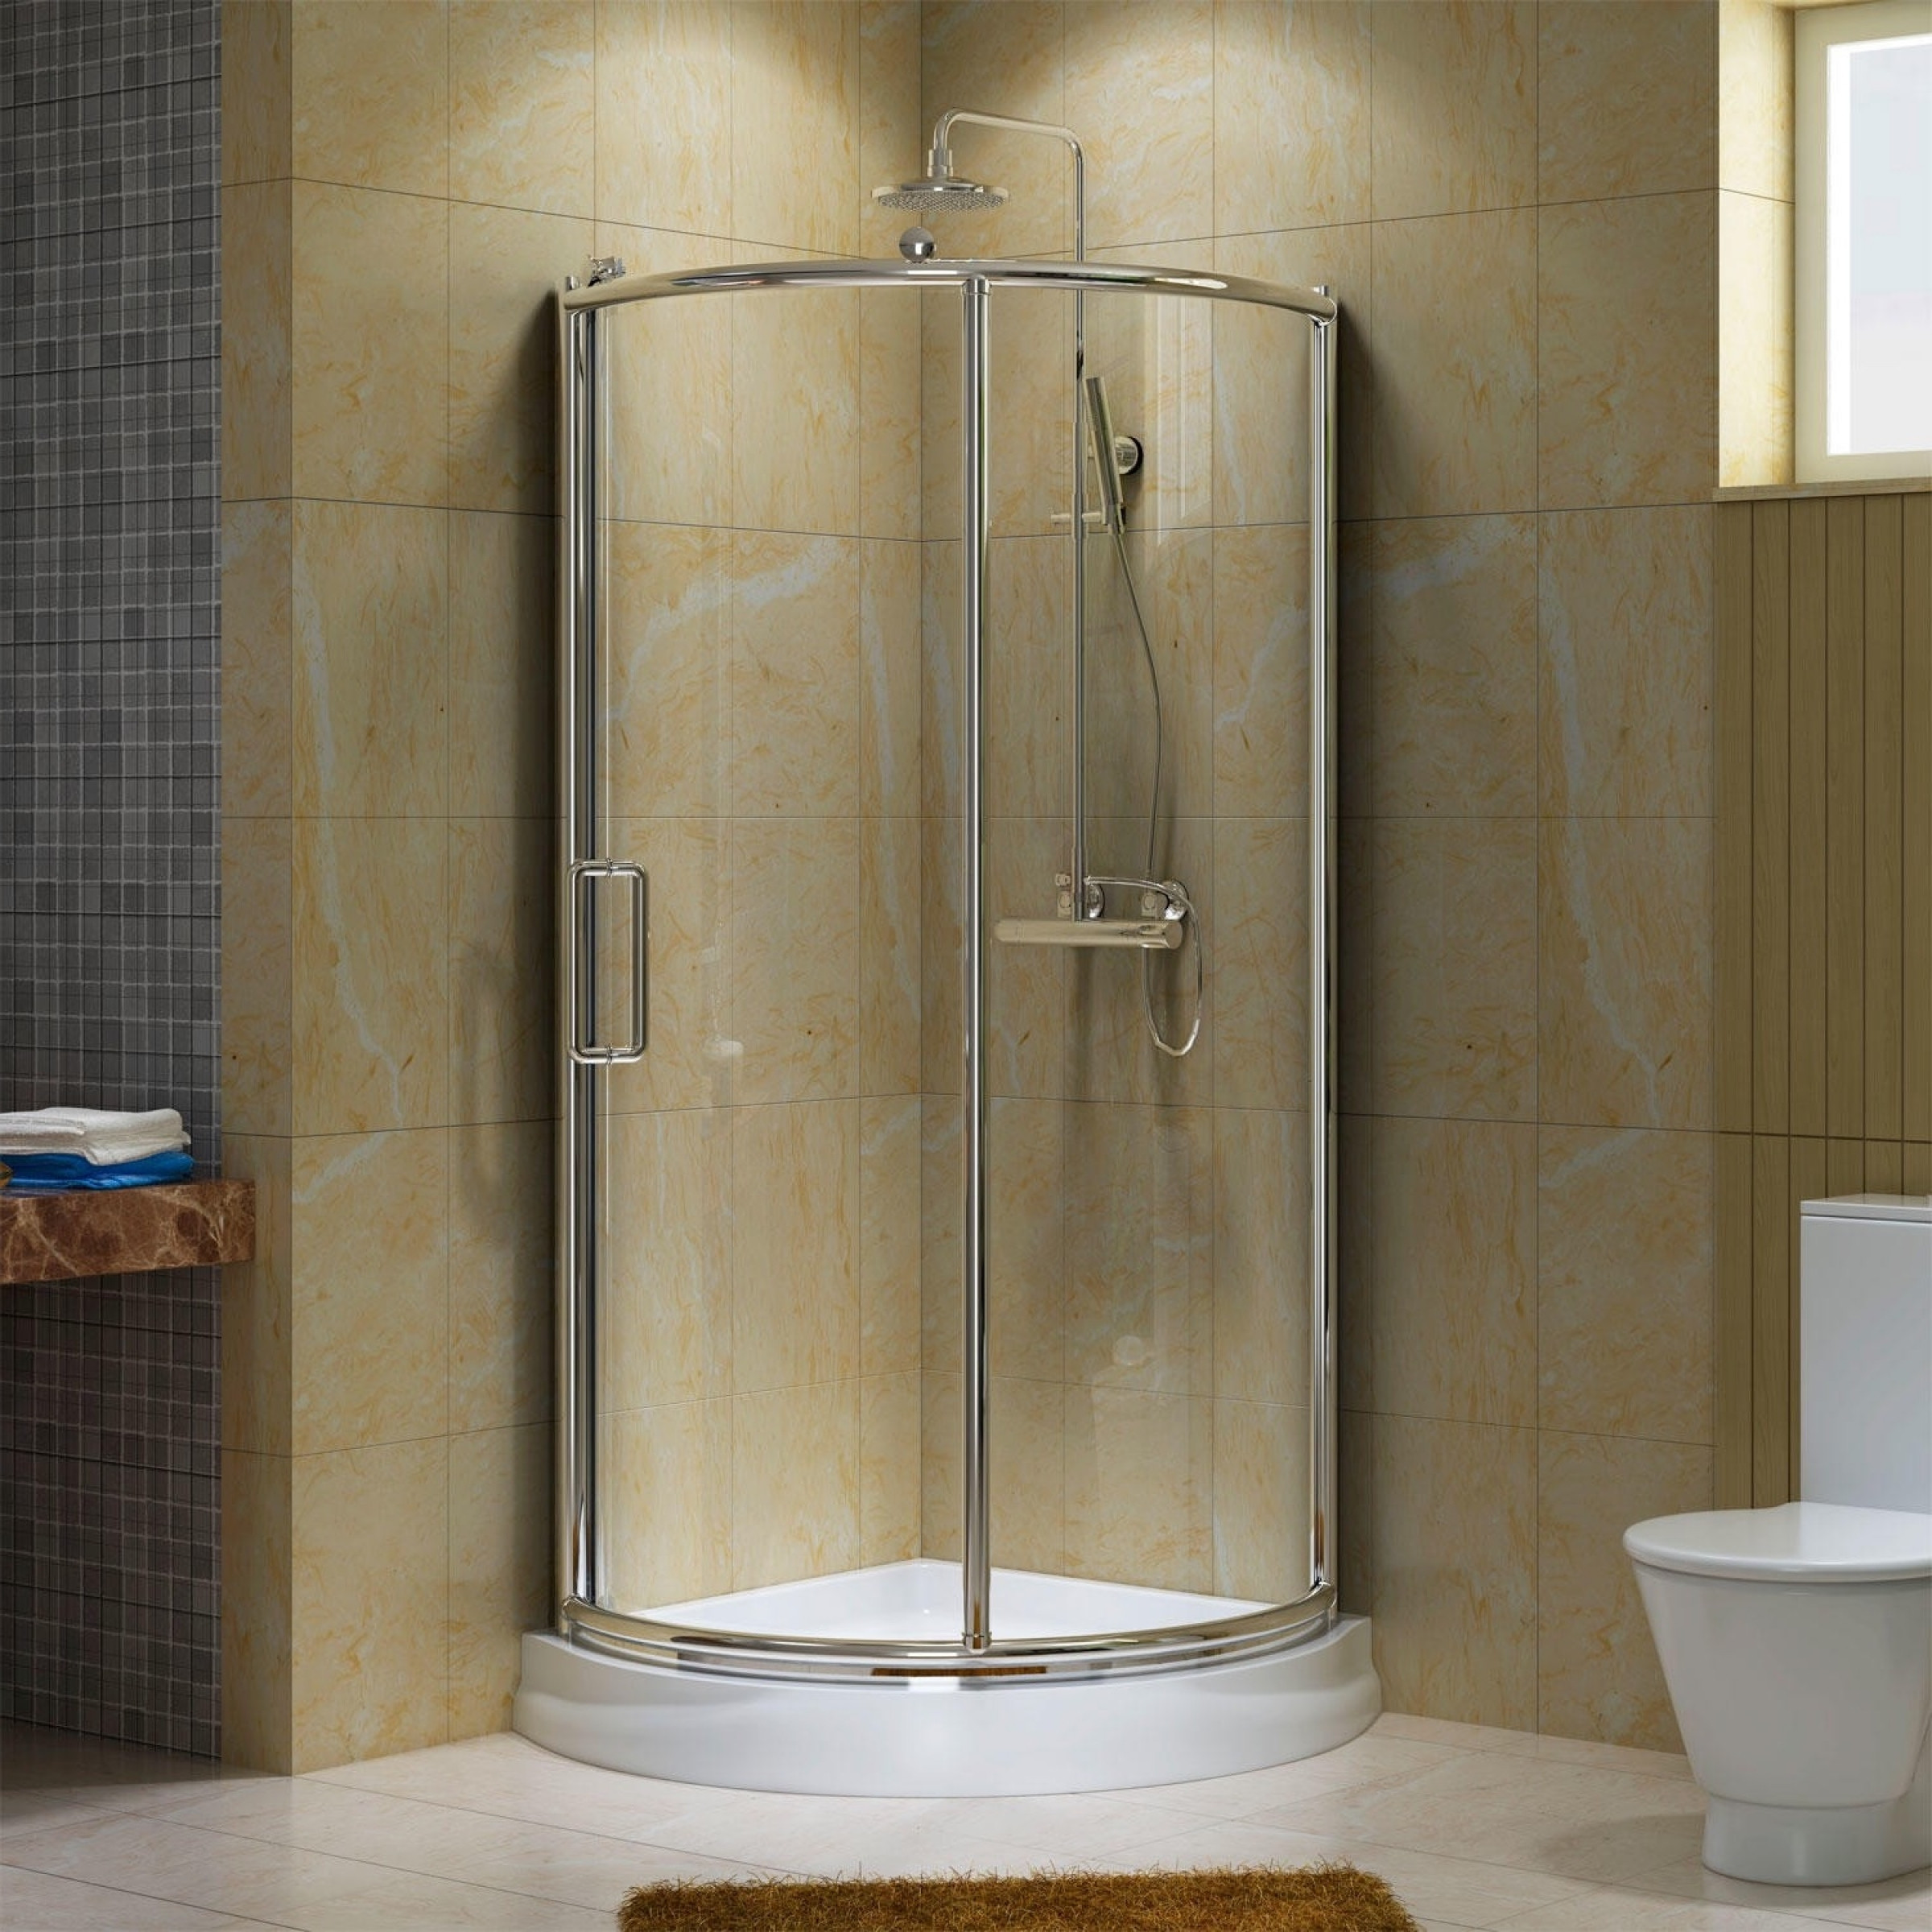 Bathroom Corner Shower
 50 Corner Shower For Small Bathroom You ll Love in 2020